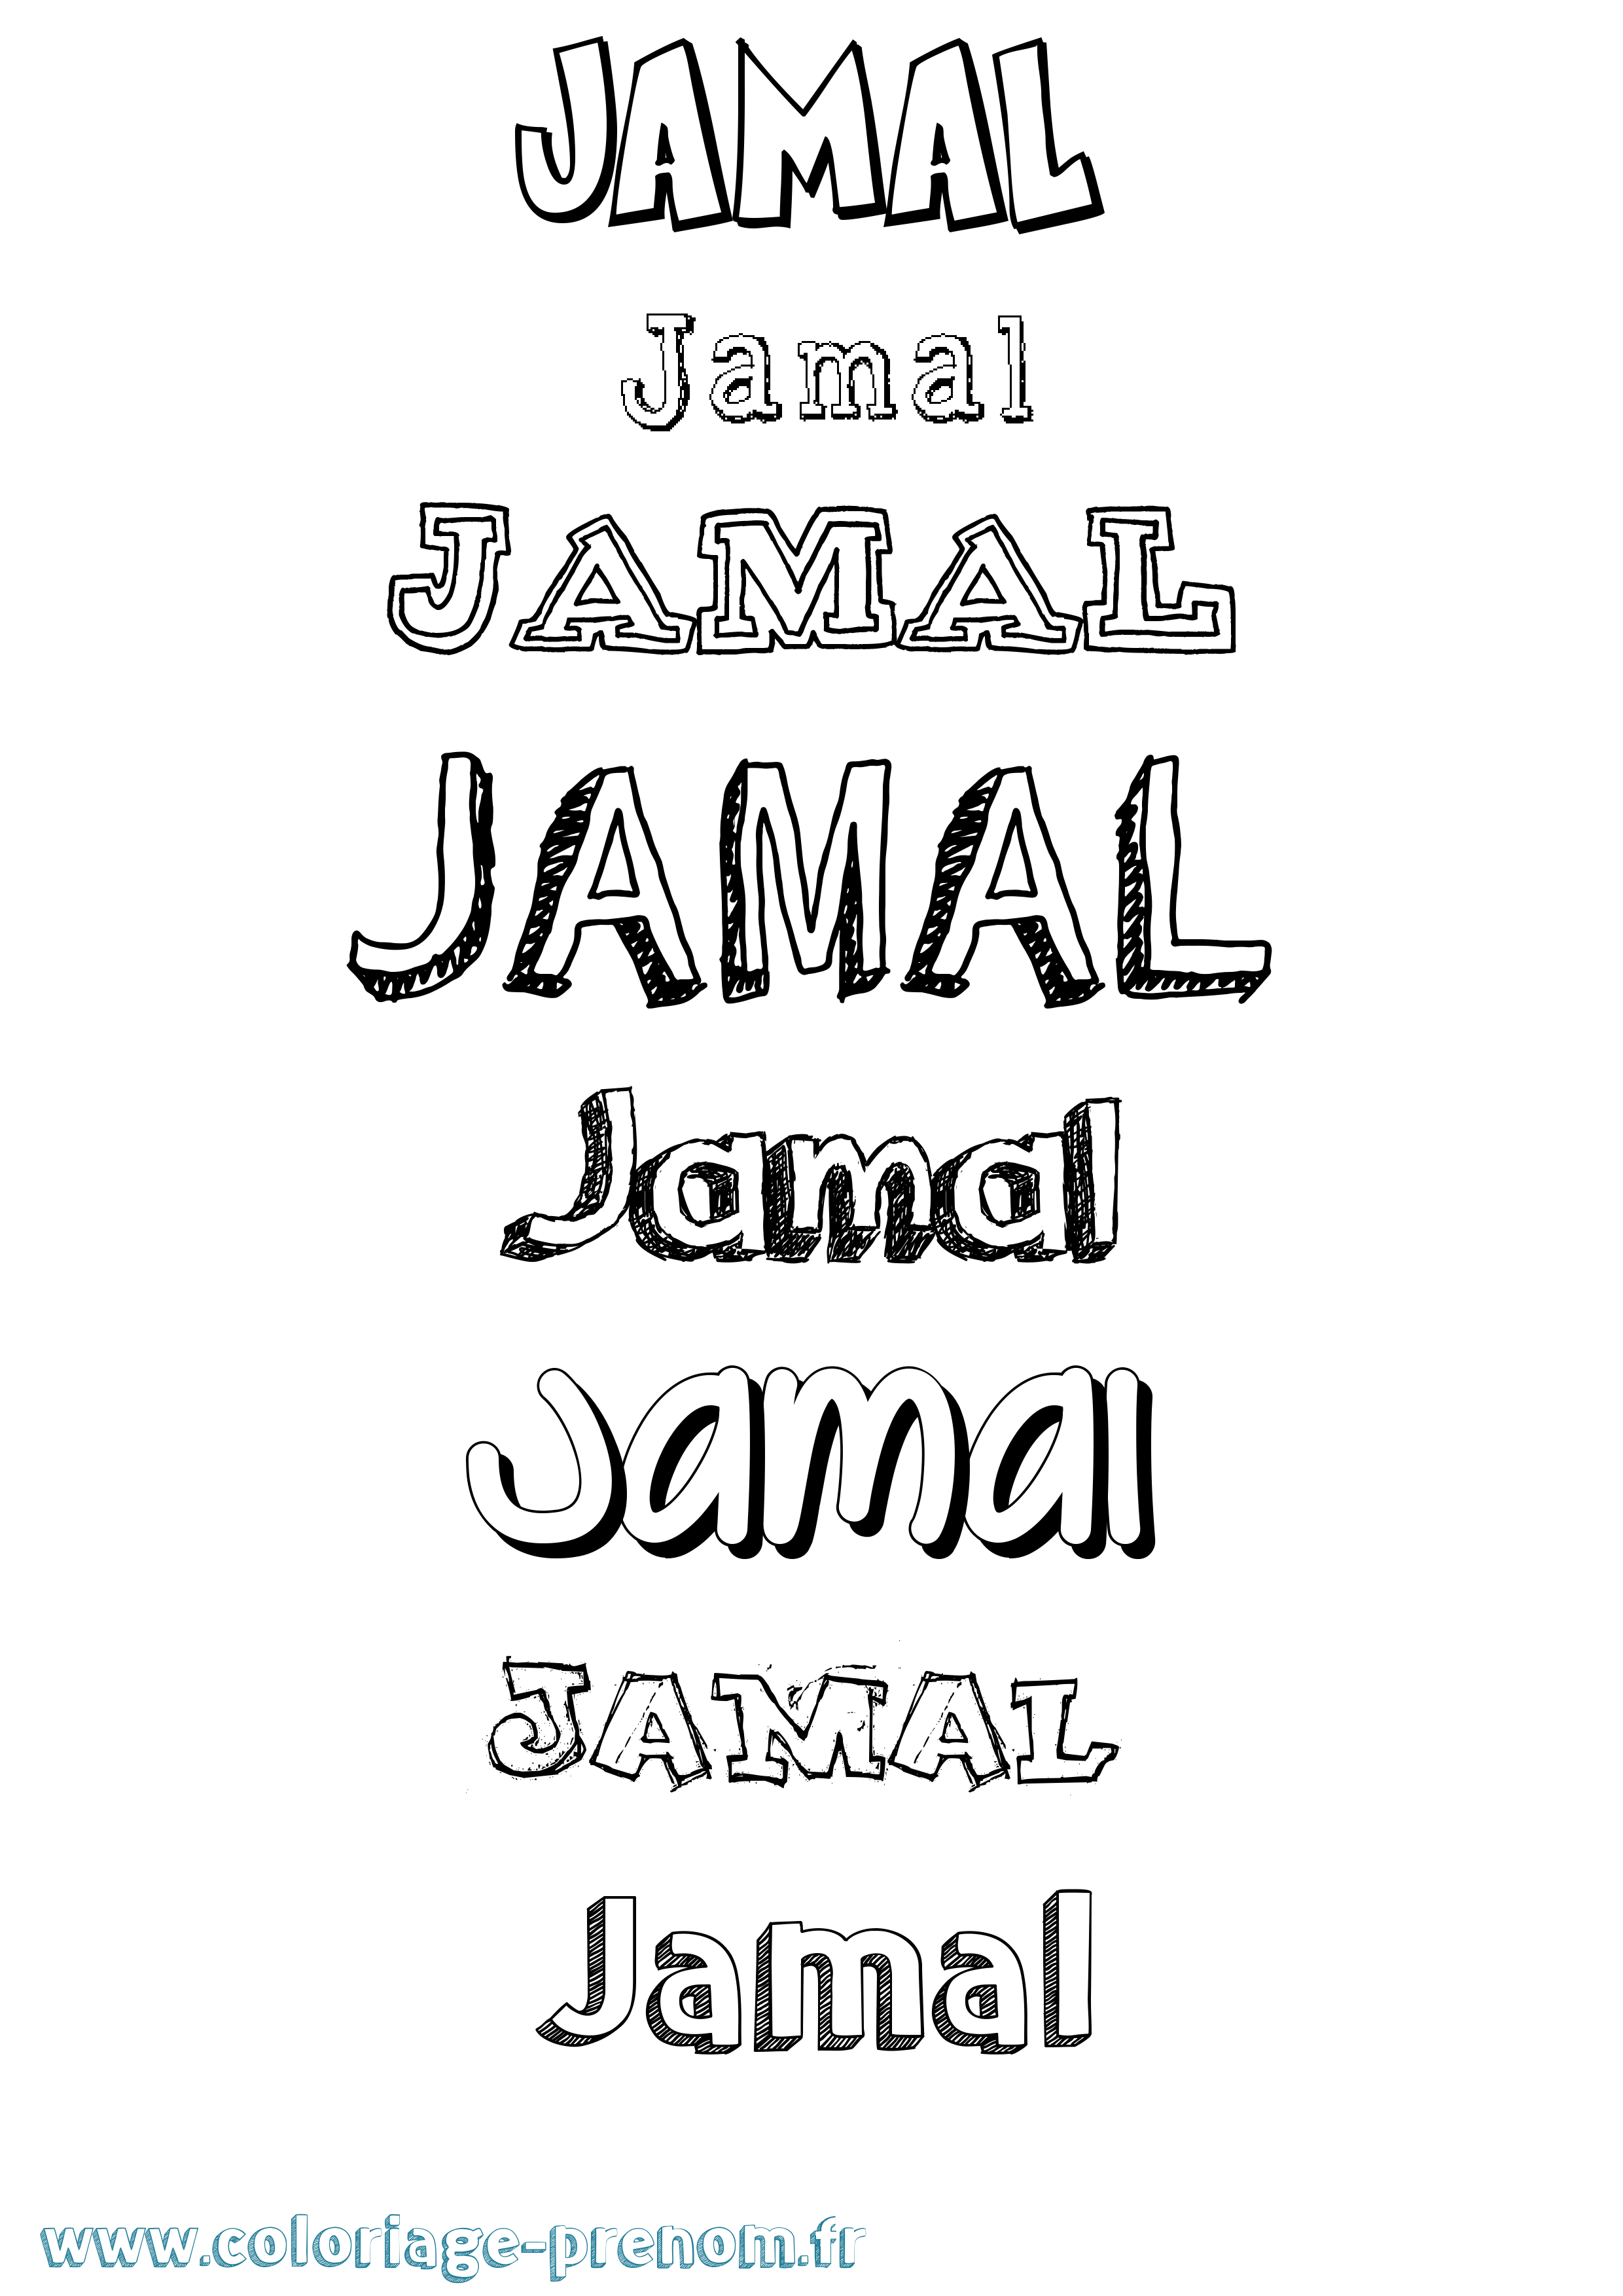 Coloriage prénom Jamal Dessiné